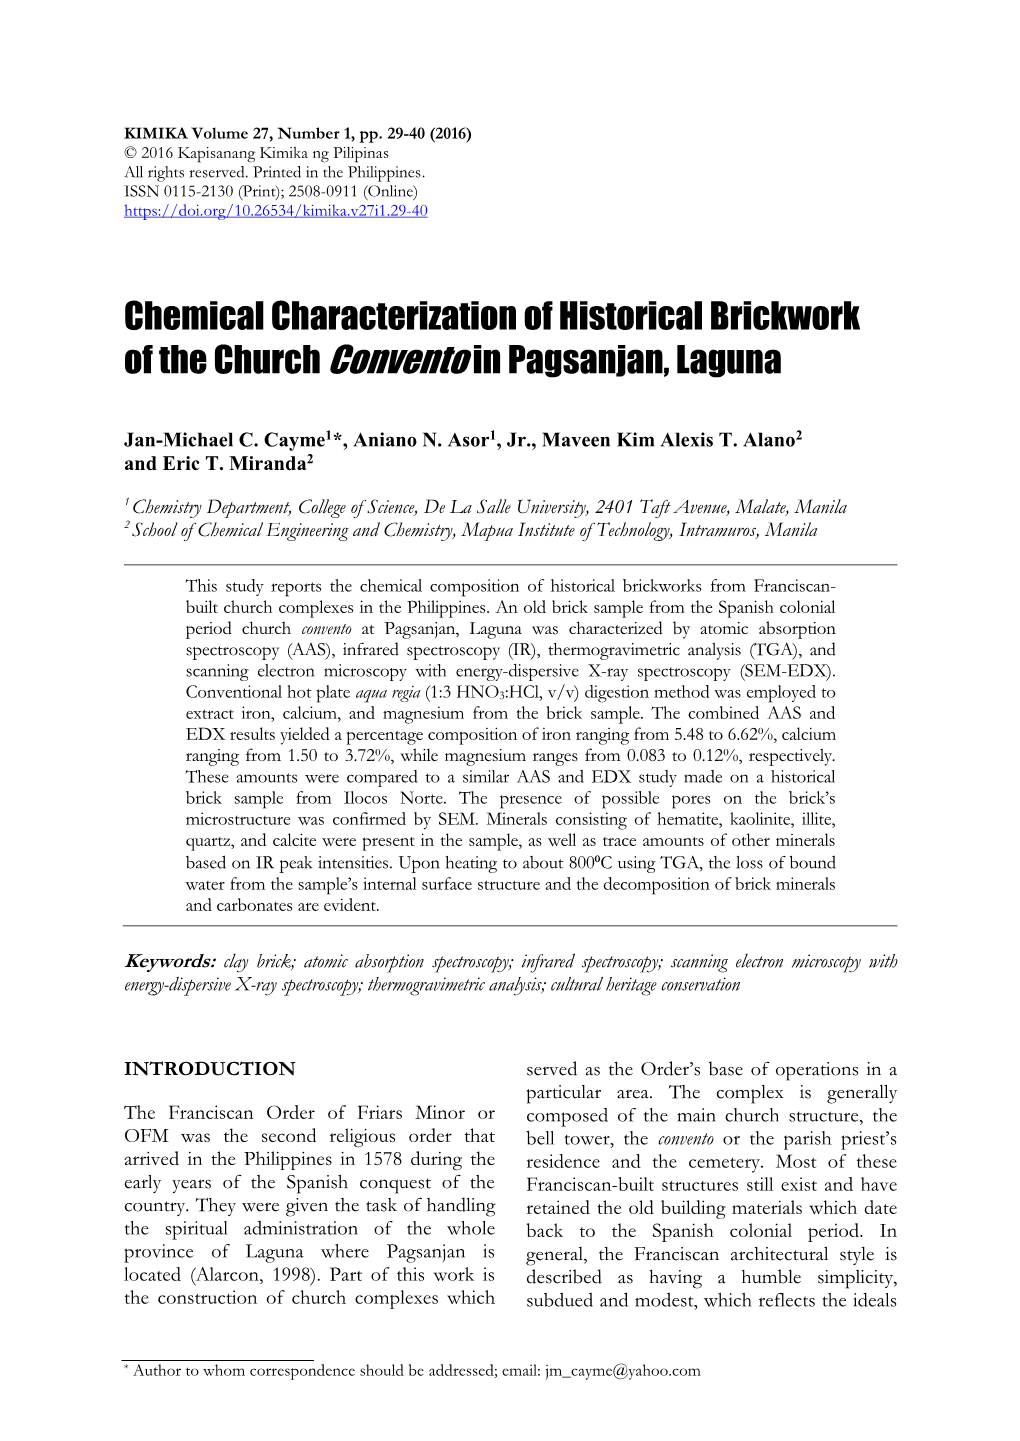 Chemical Characterization of Historical Brickwork of the Church Convento in Pagsanjan, Laguna